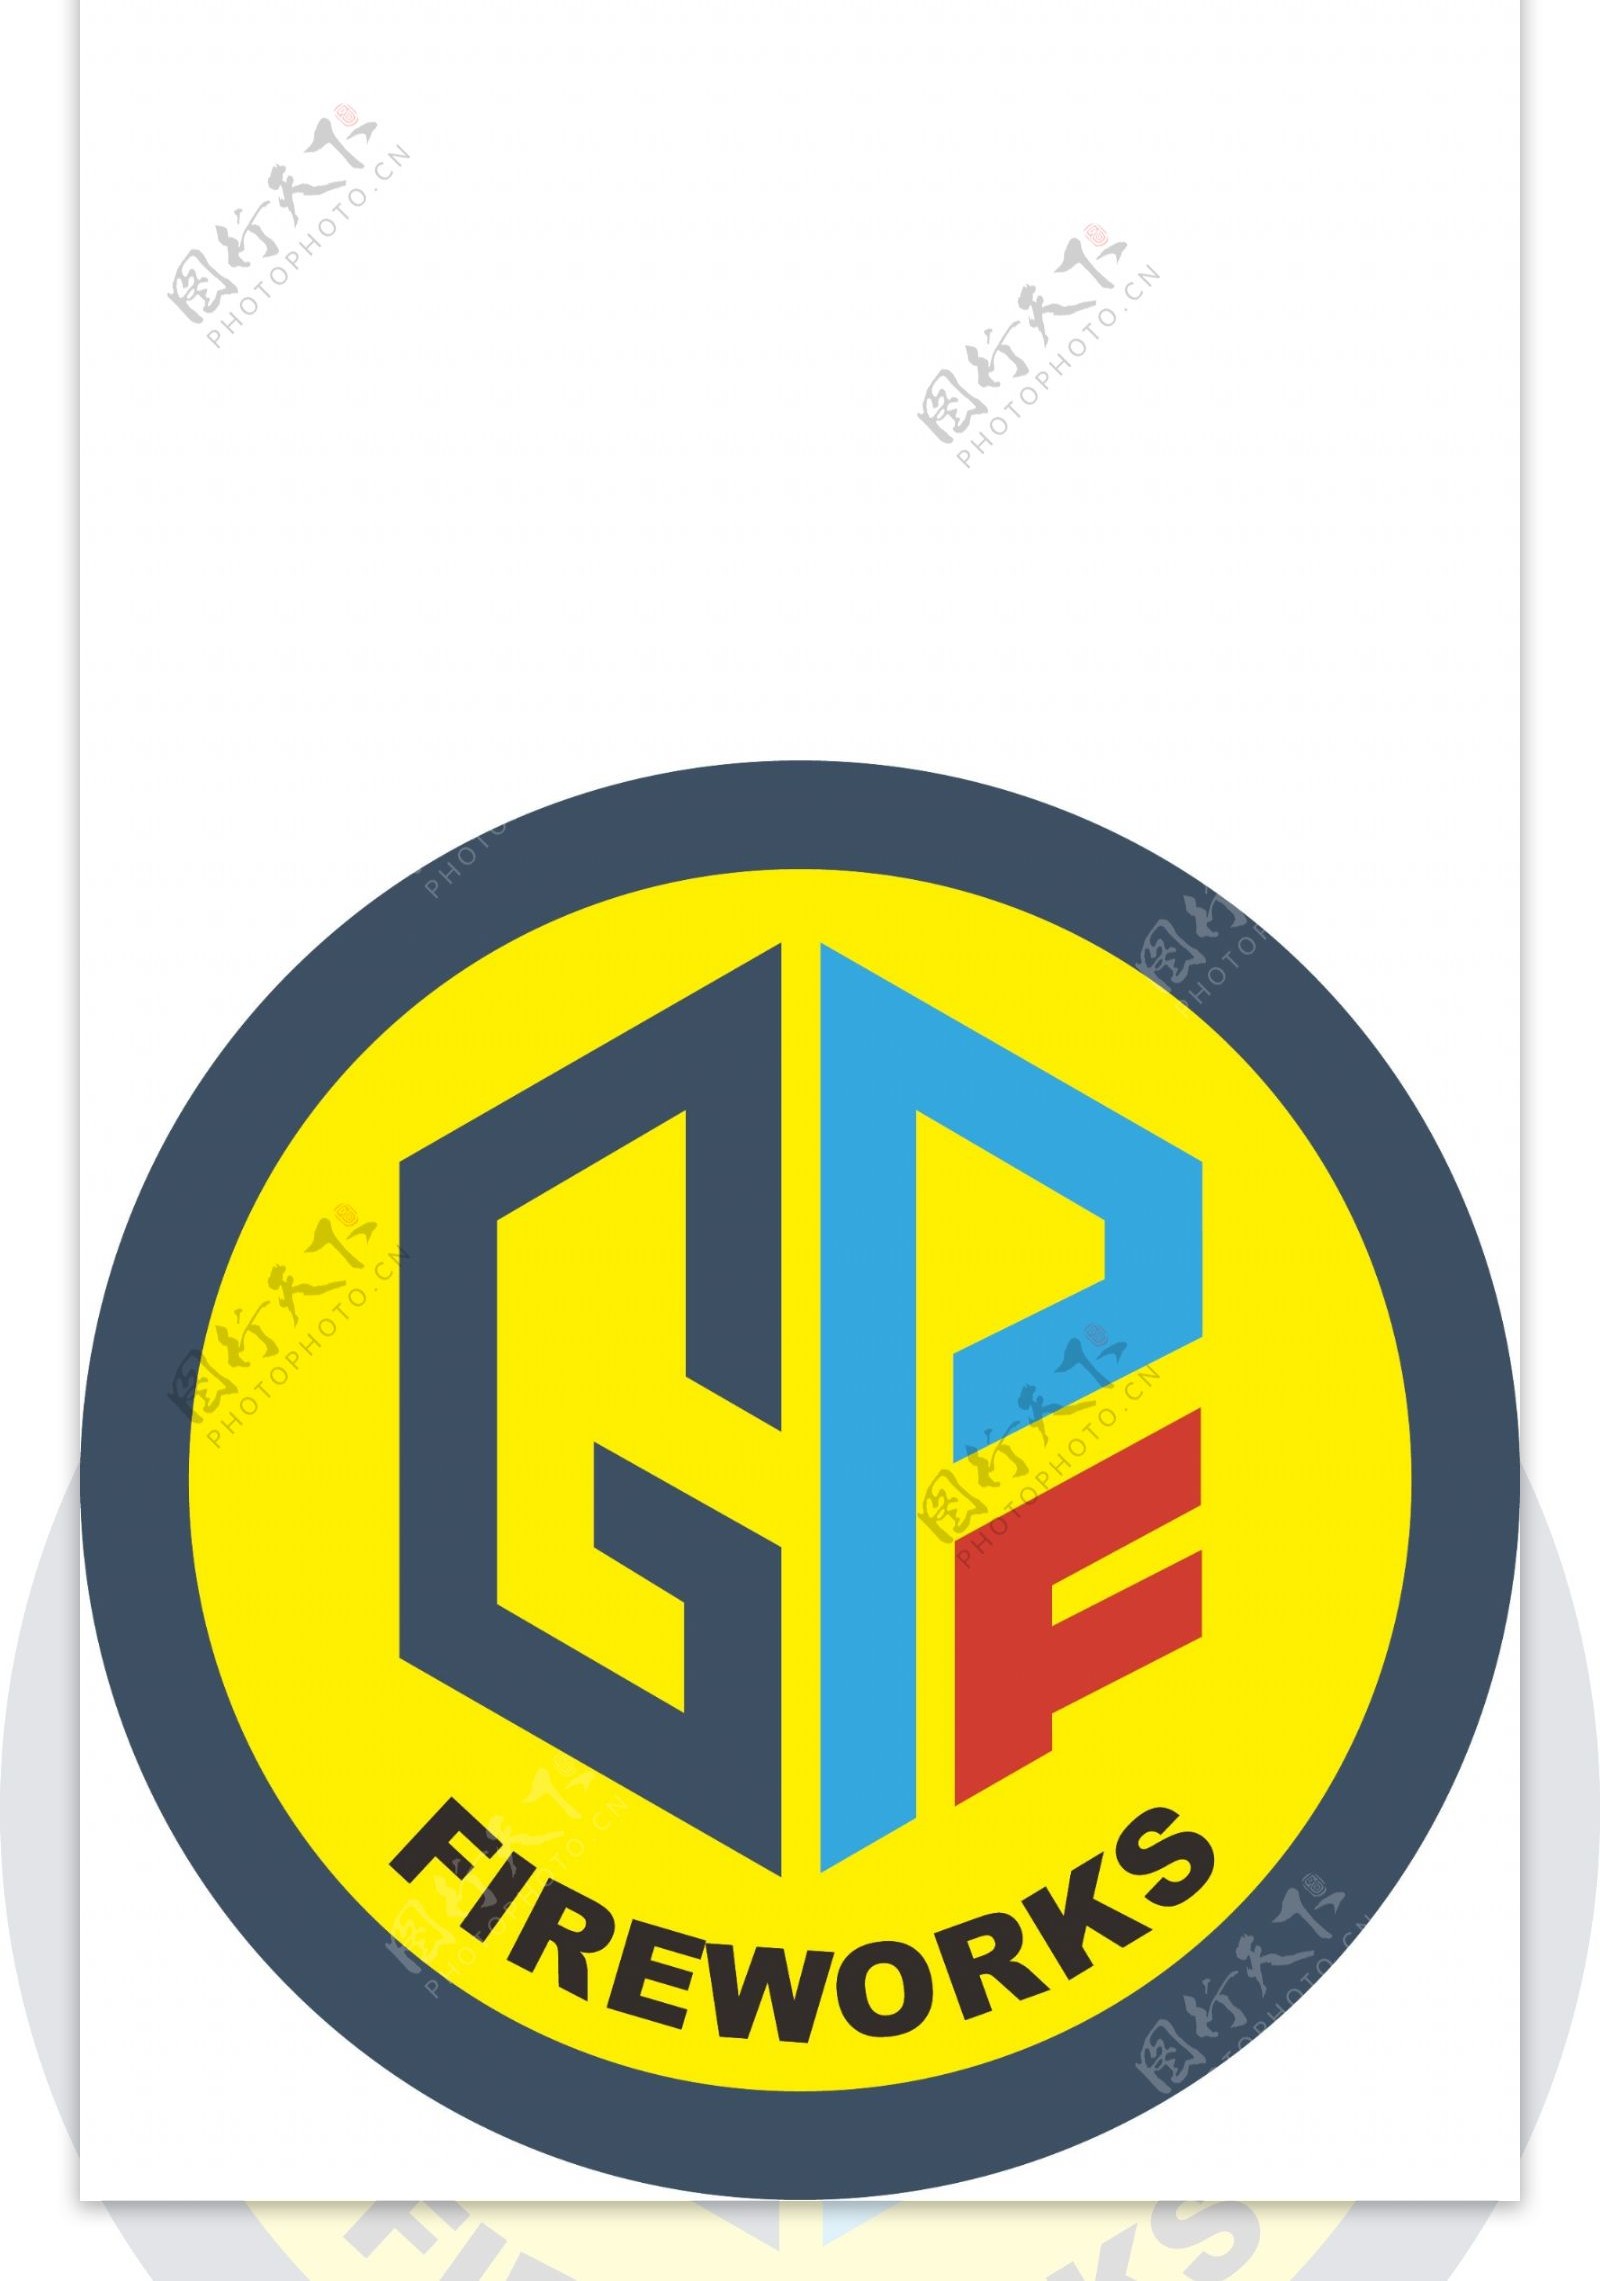 GPF标志设计